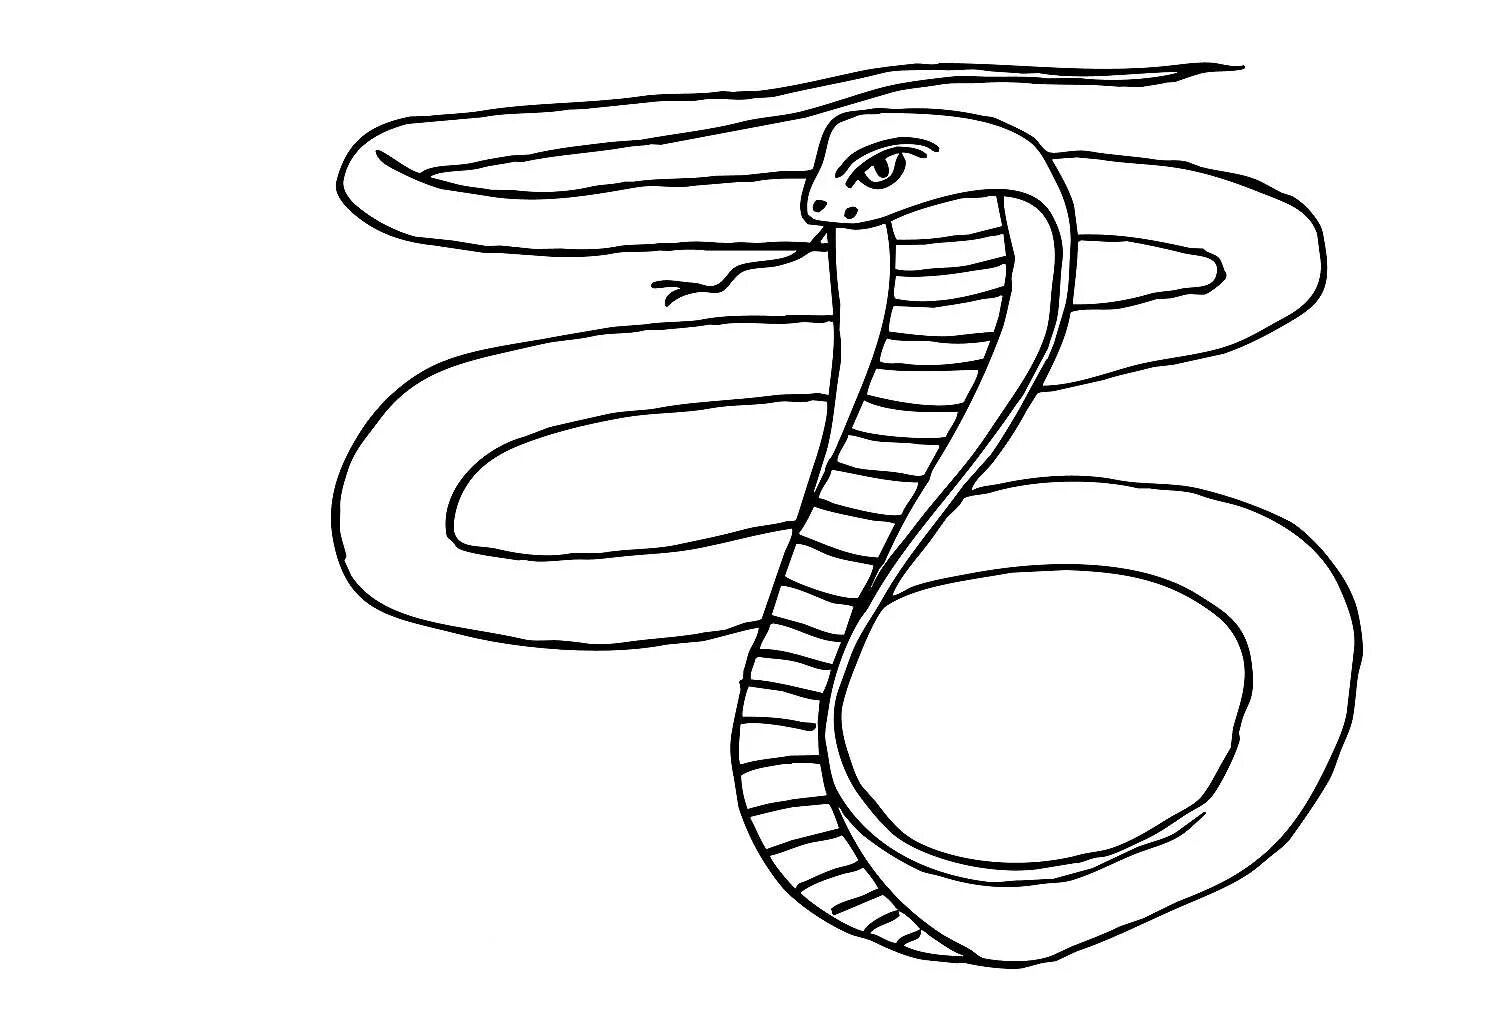 Раскраска змей для детей. Раскраска змея Кобра. Степная гадюка раскраска. Раскраска змеи для детей. Змея раскраска для детей.